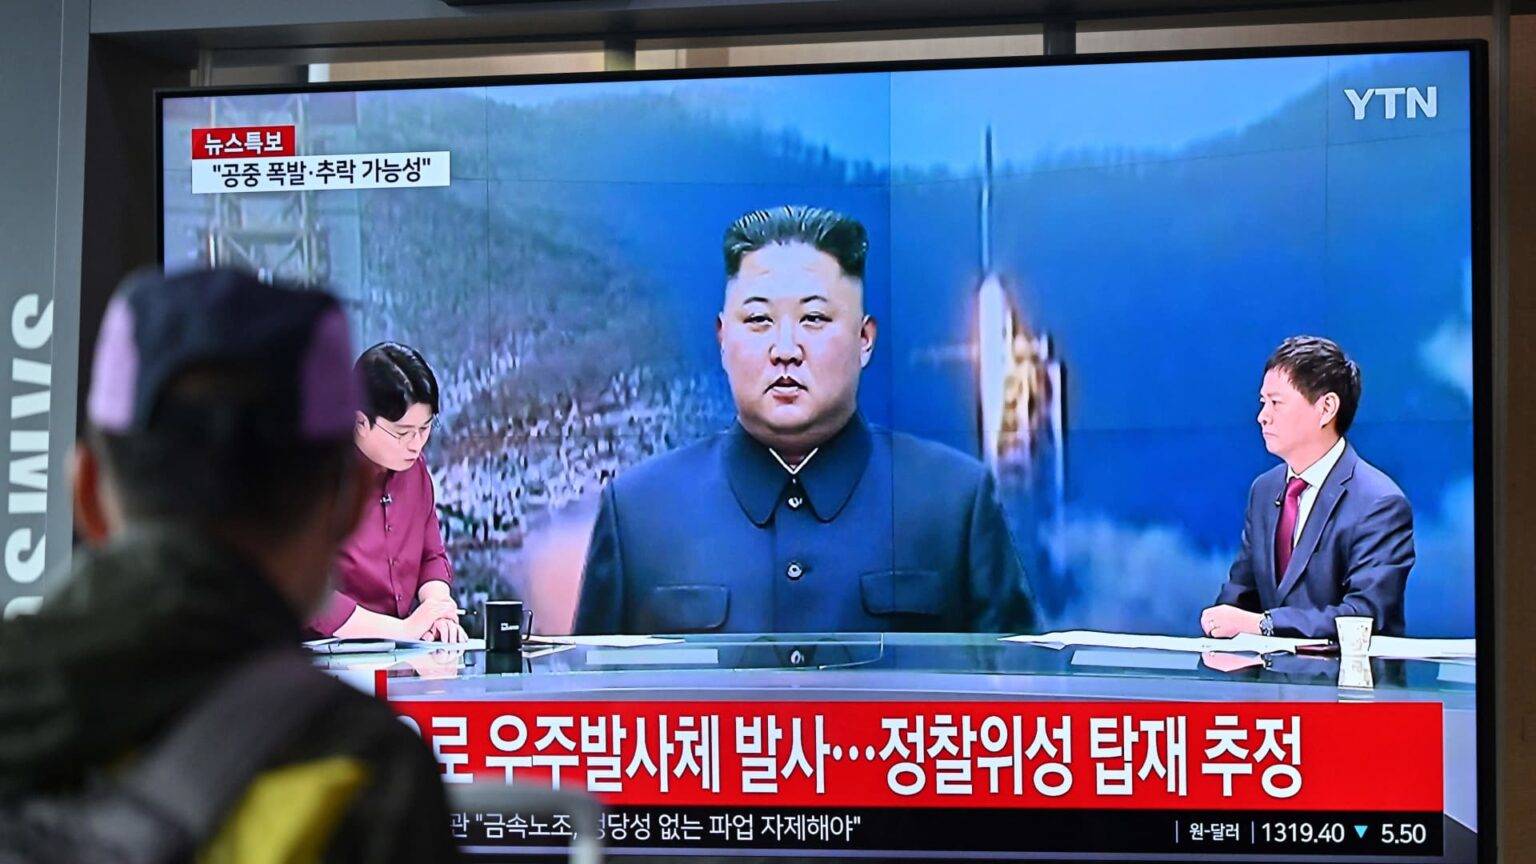 North Korea says spy satellite launch crashed into sea